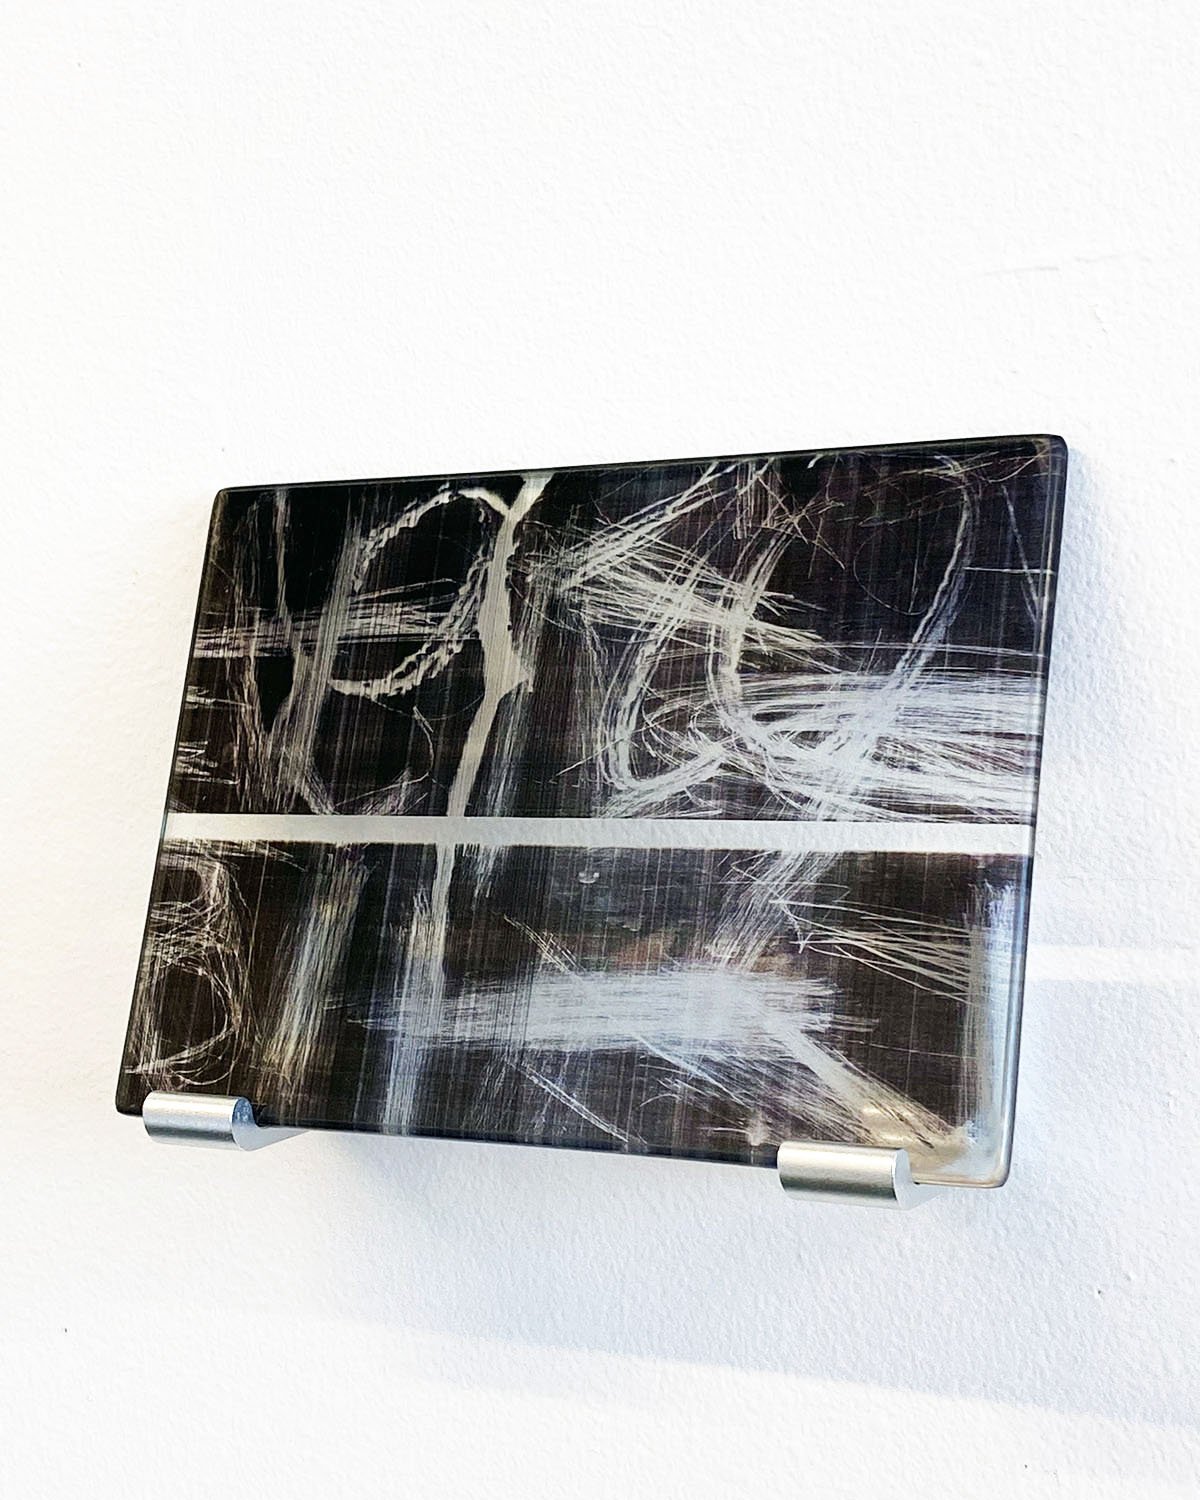   #006  2019 UV print on glass 4x6” 